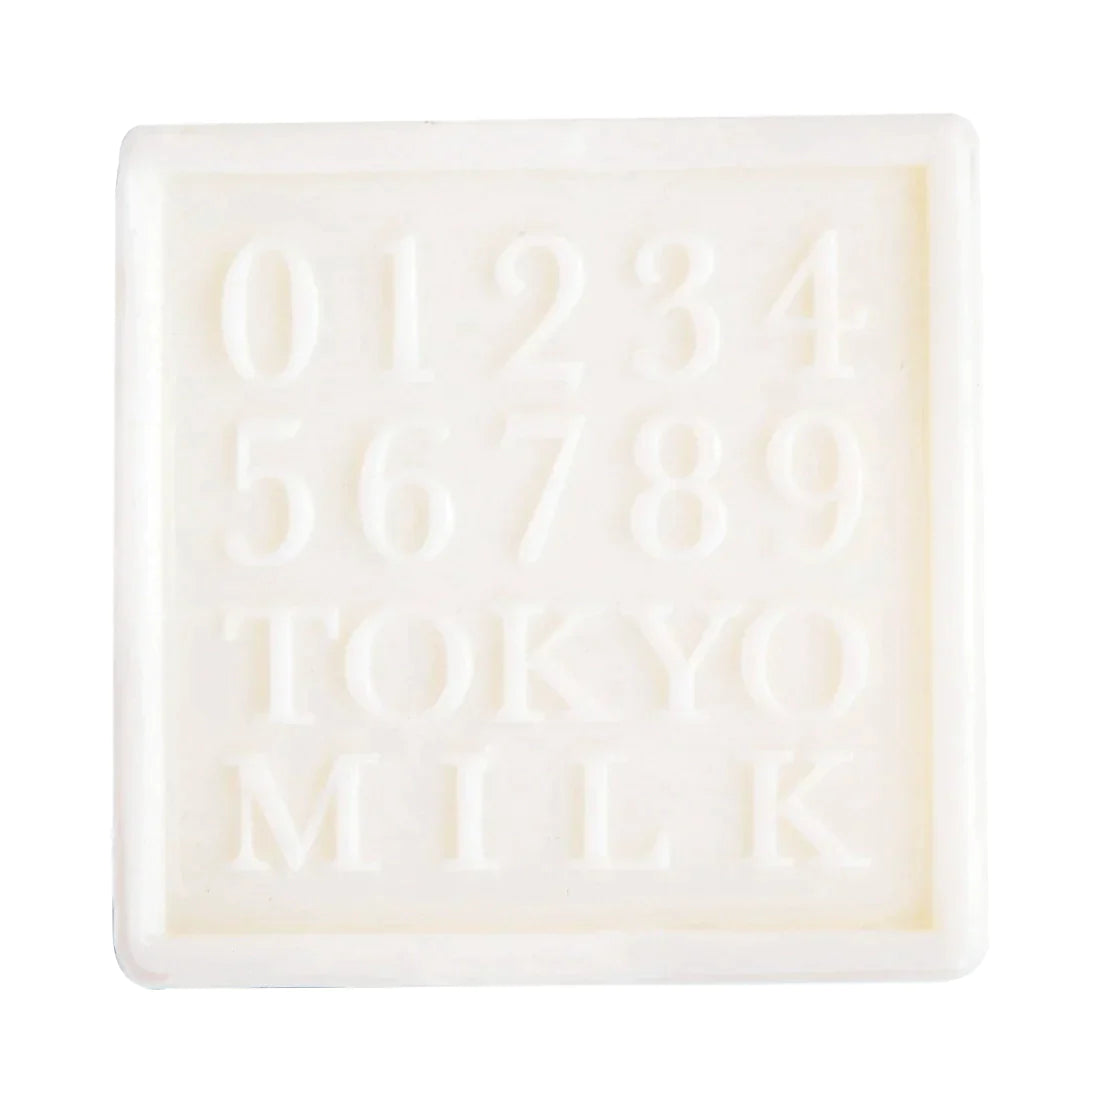 Tokyomilk "Absolutely Fabulous" Finest Perfumed Soap – Green Tea Fragrance - 4oz